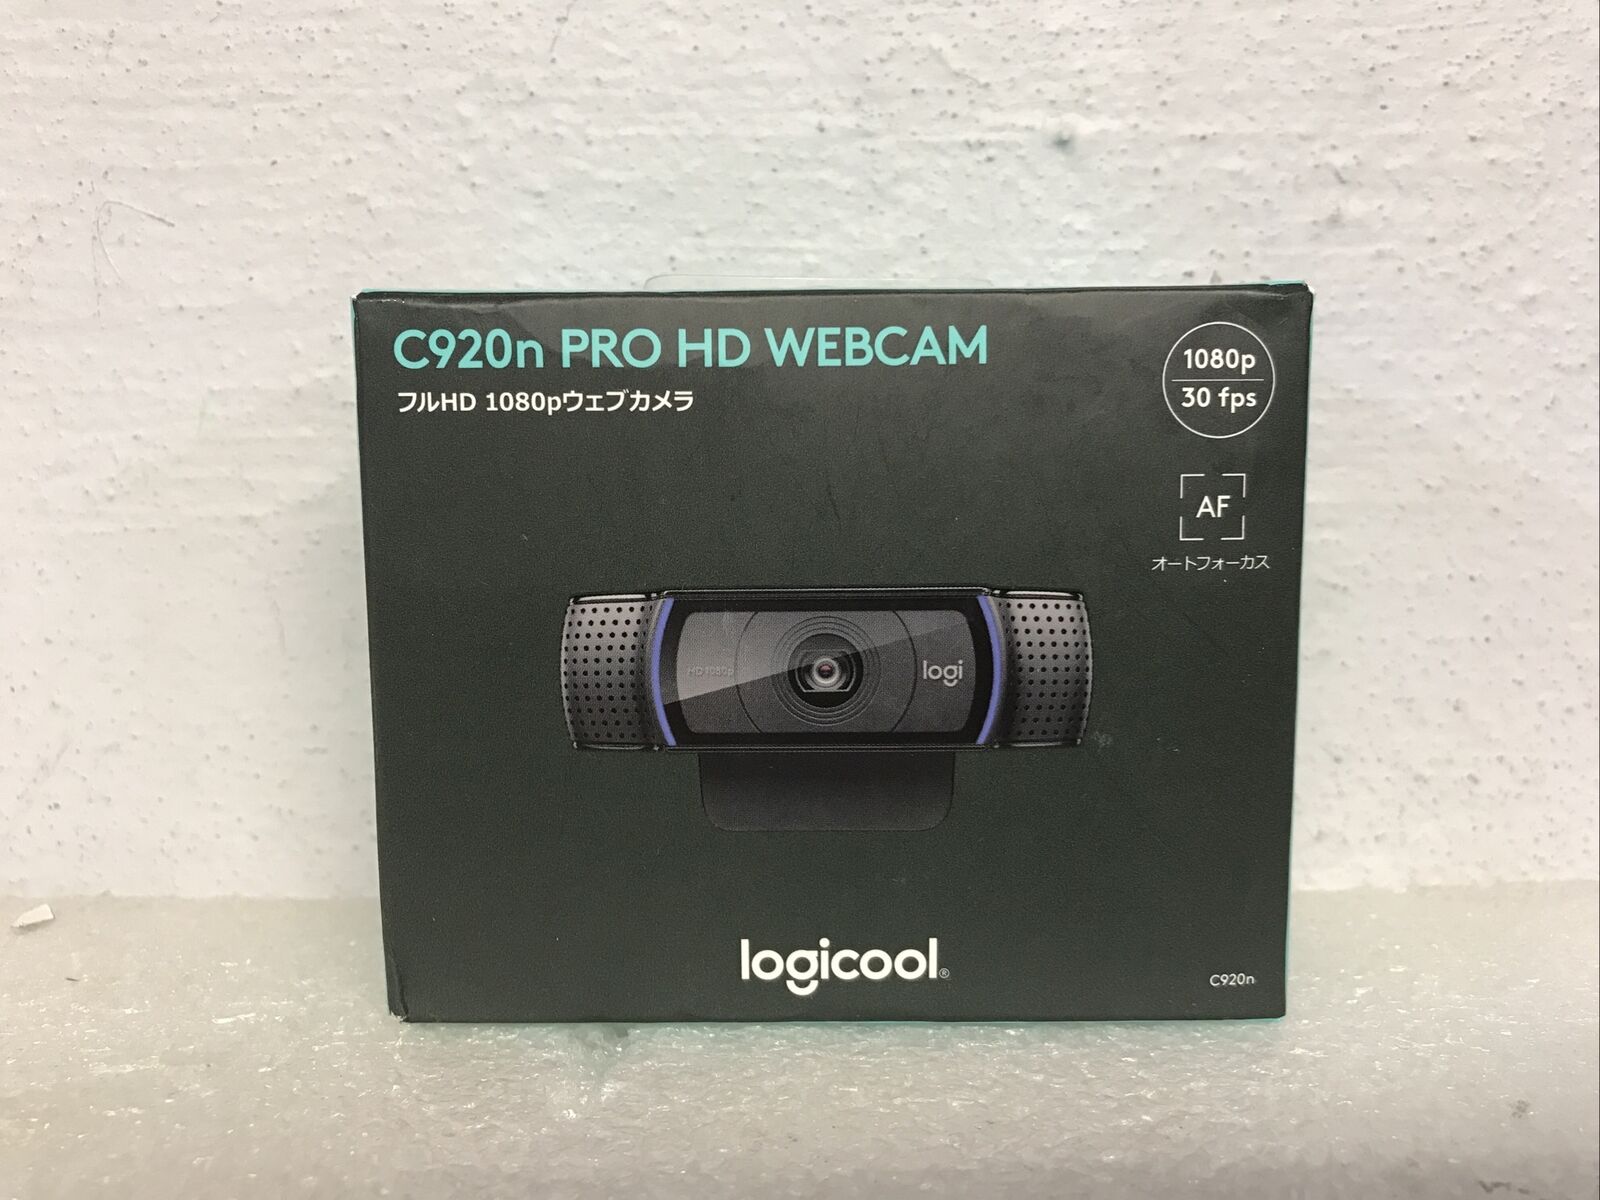 Logicool C920n HD Pro Webcam Widescreen 1080p 30fps Logitech New Sealed